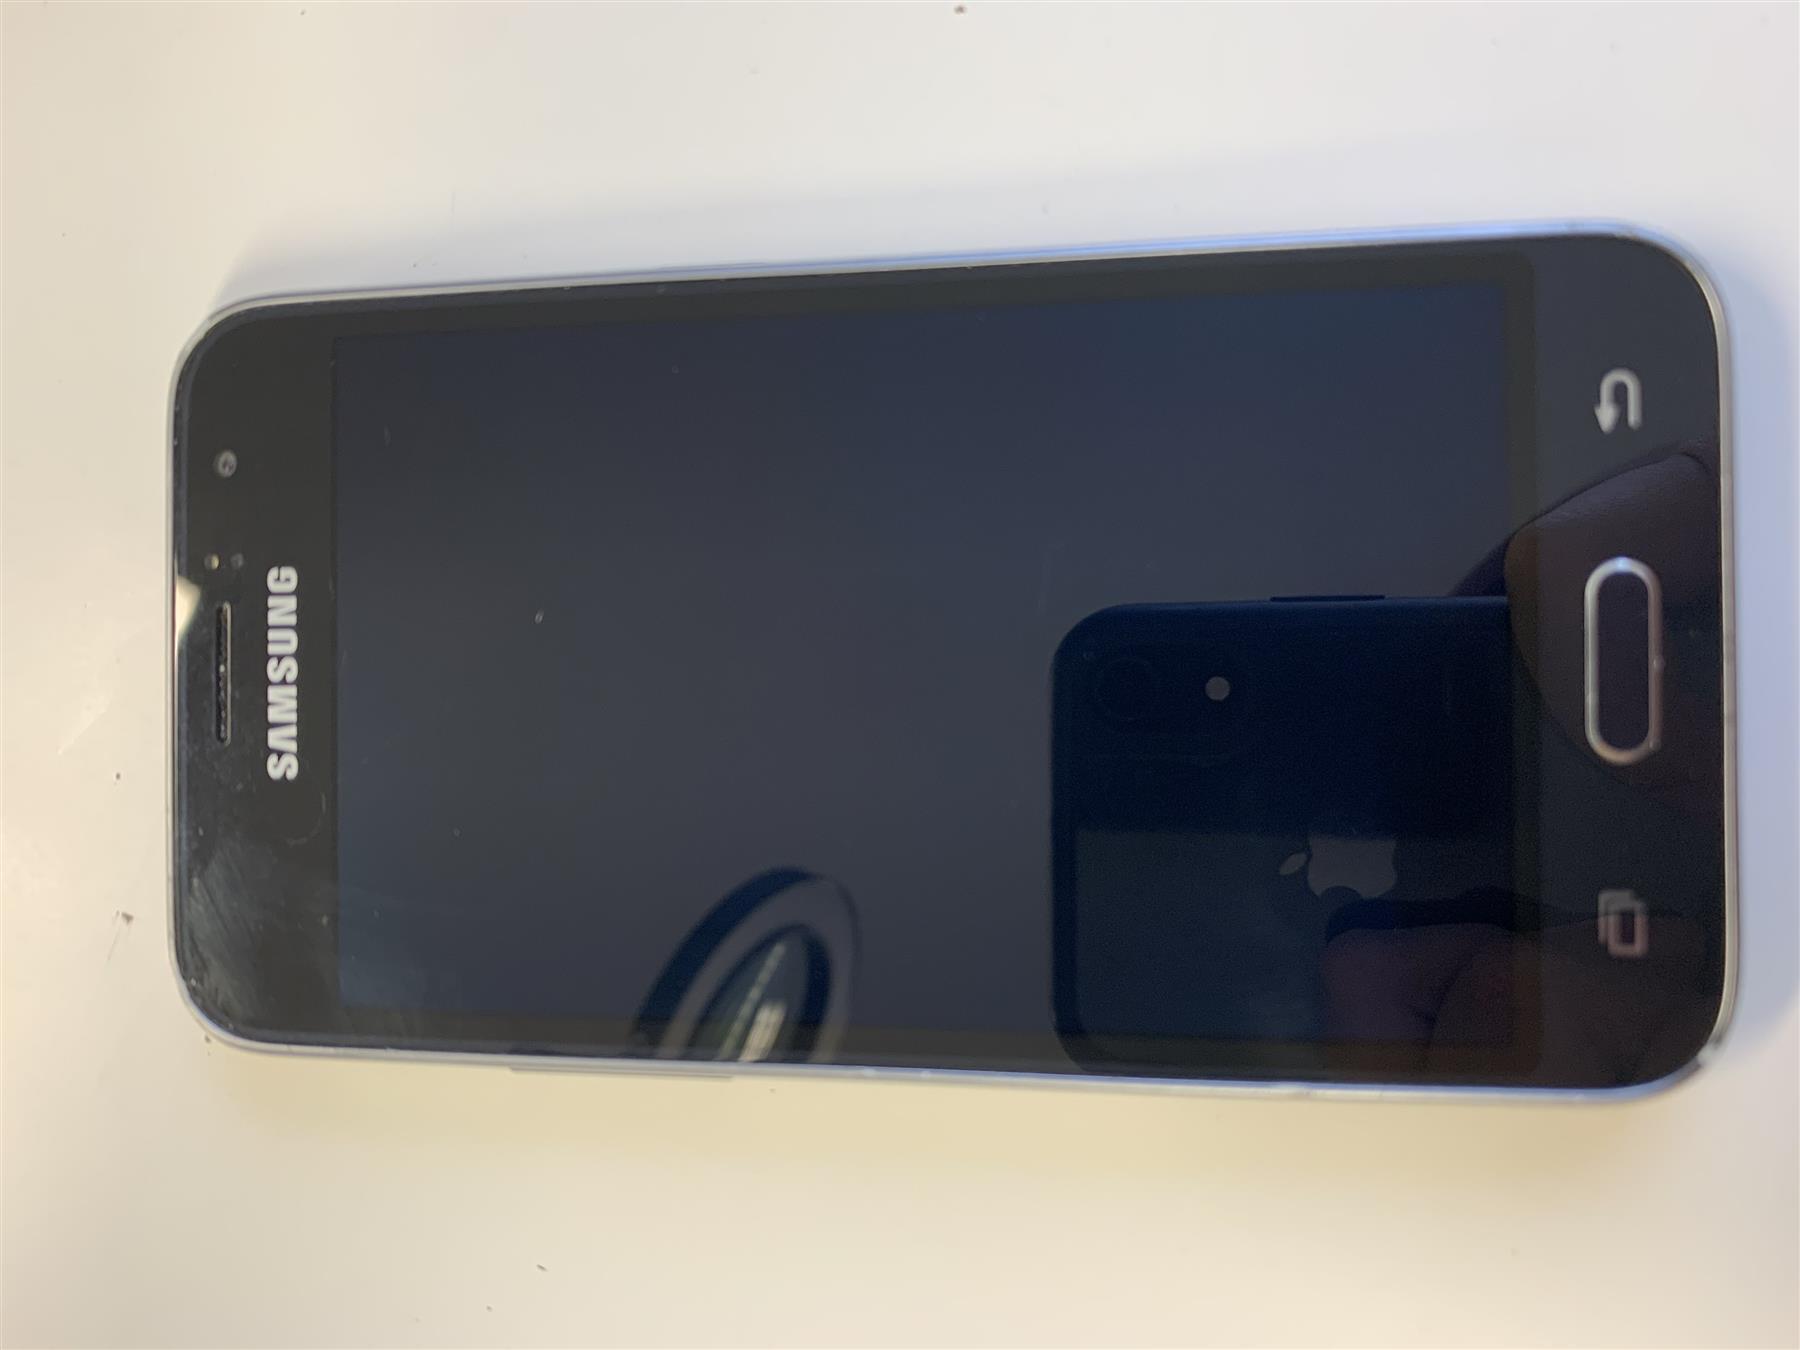 Samsung Galaxy J1 (2016) 4GB Black Unlocked - used